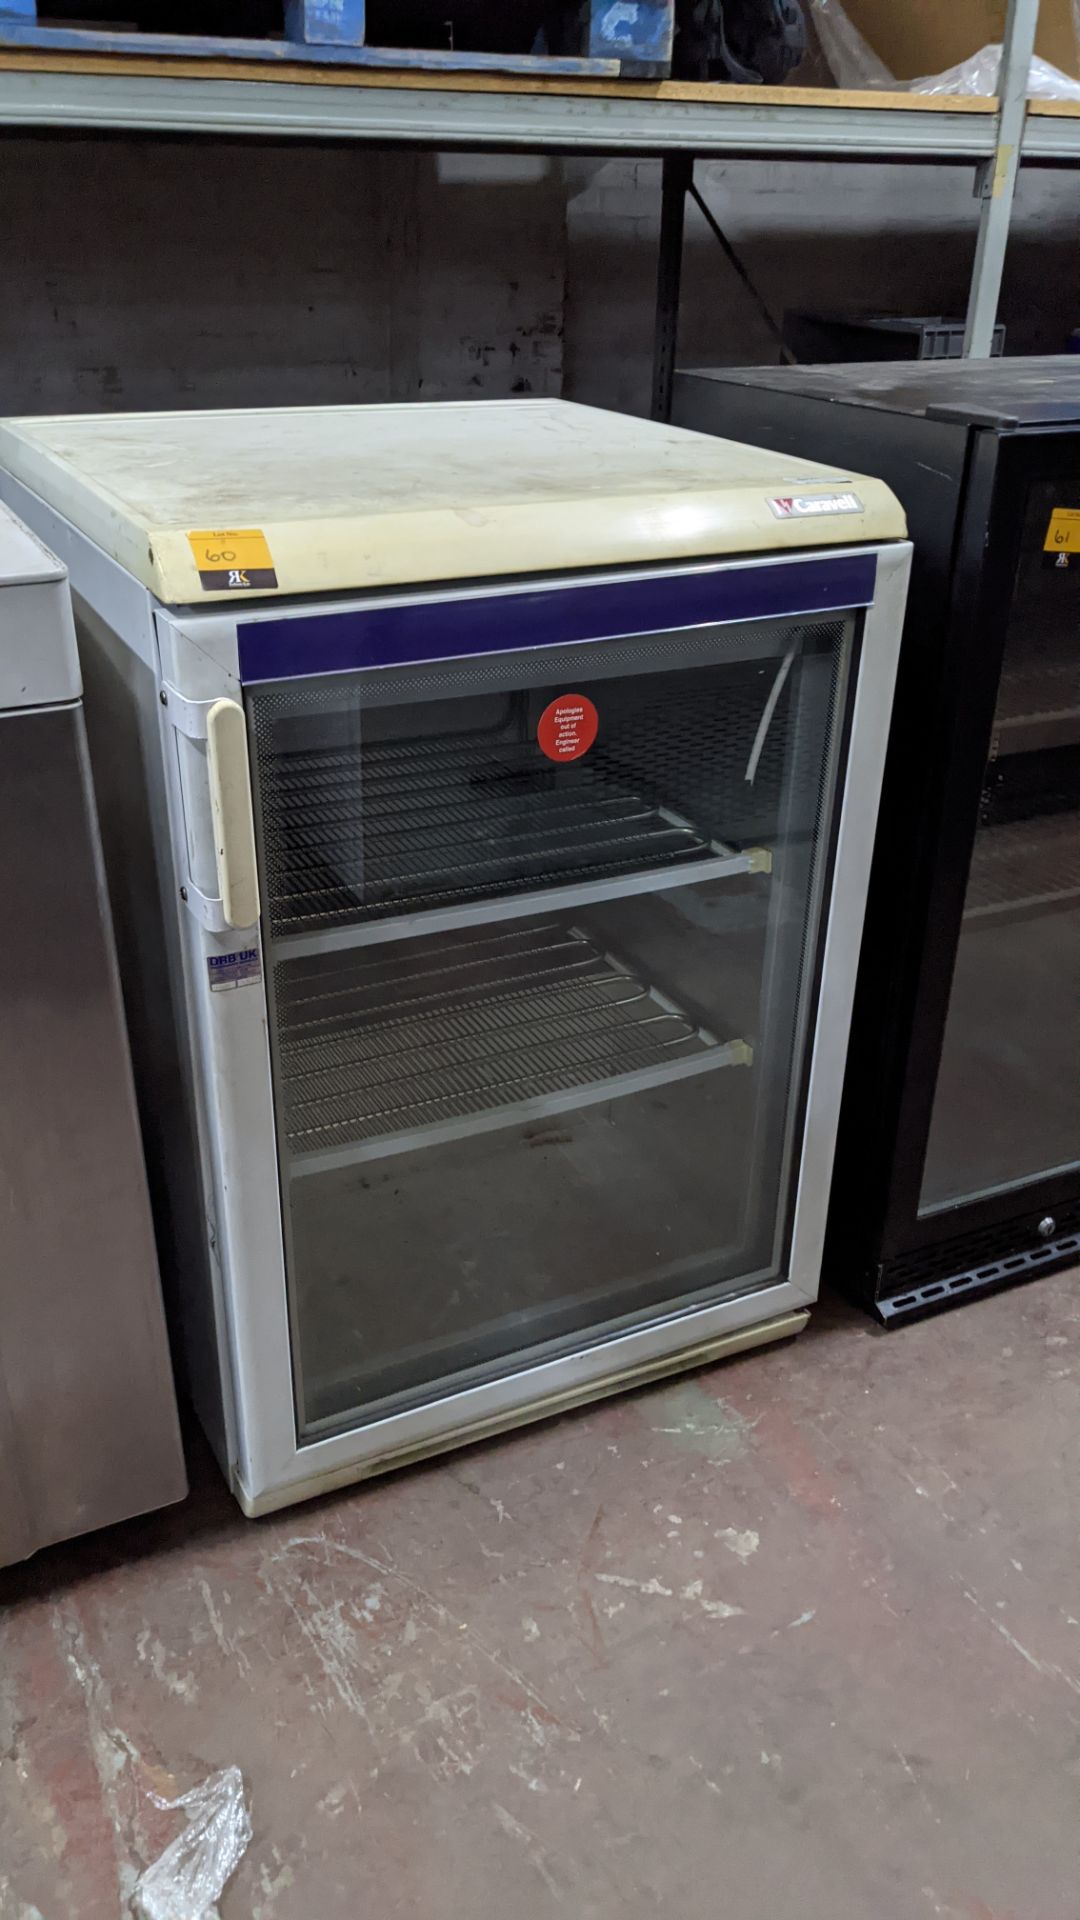 Caravell clear door undercounter freezer - Image 2 of 4